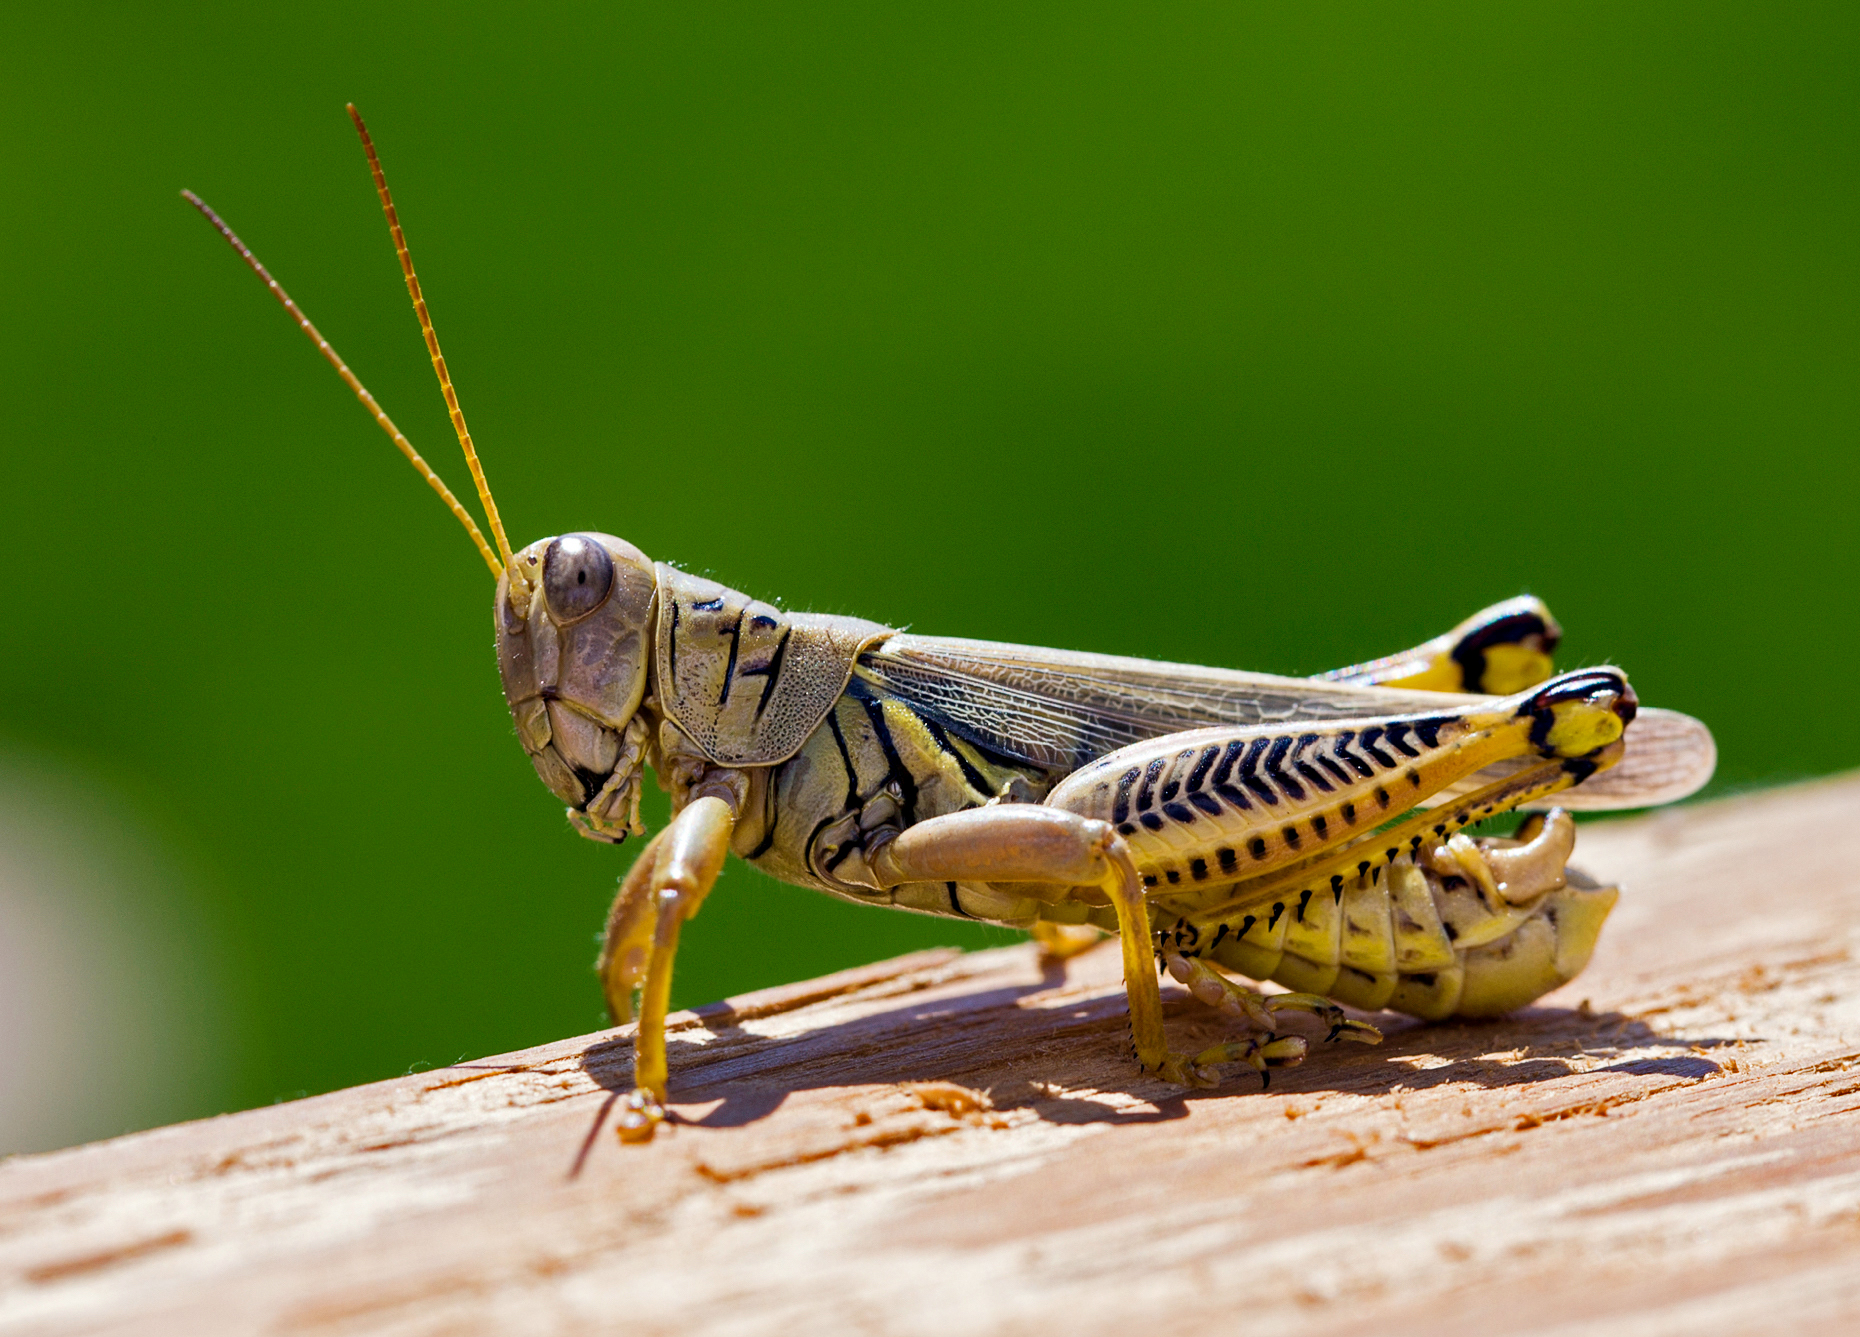 Grasshopper (Caelifera) on a wooden garden fence.